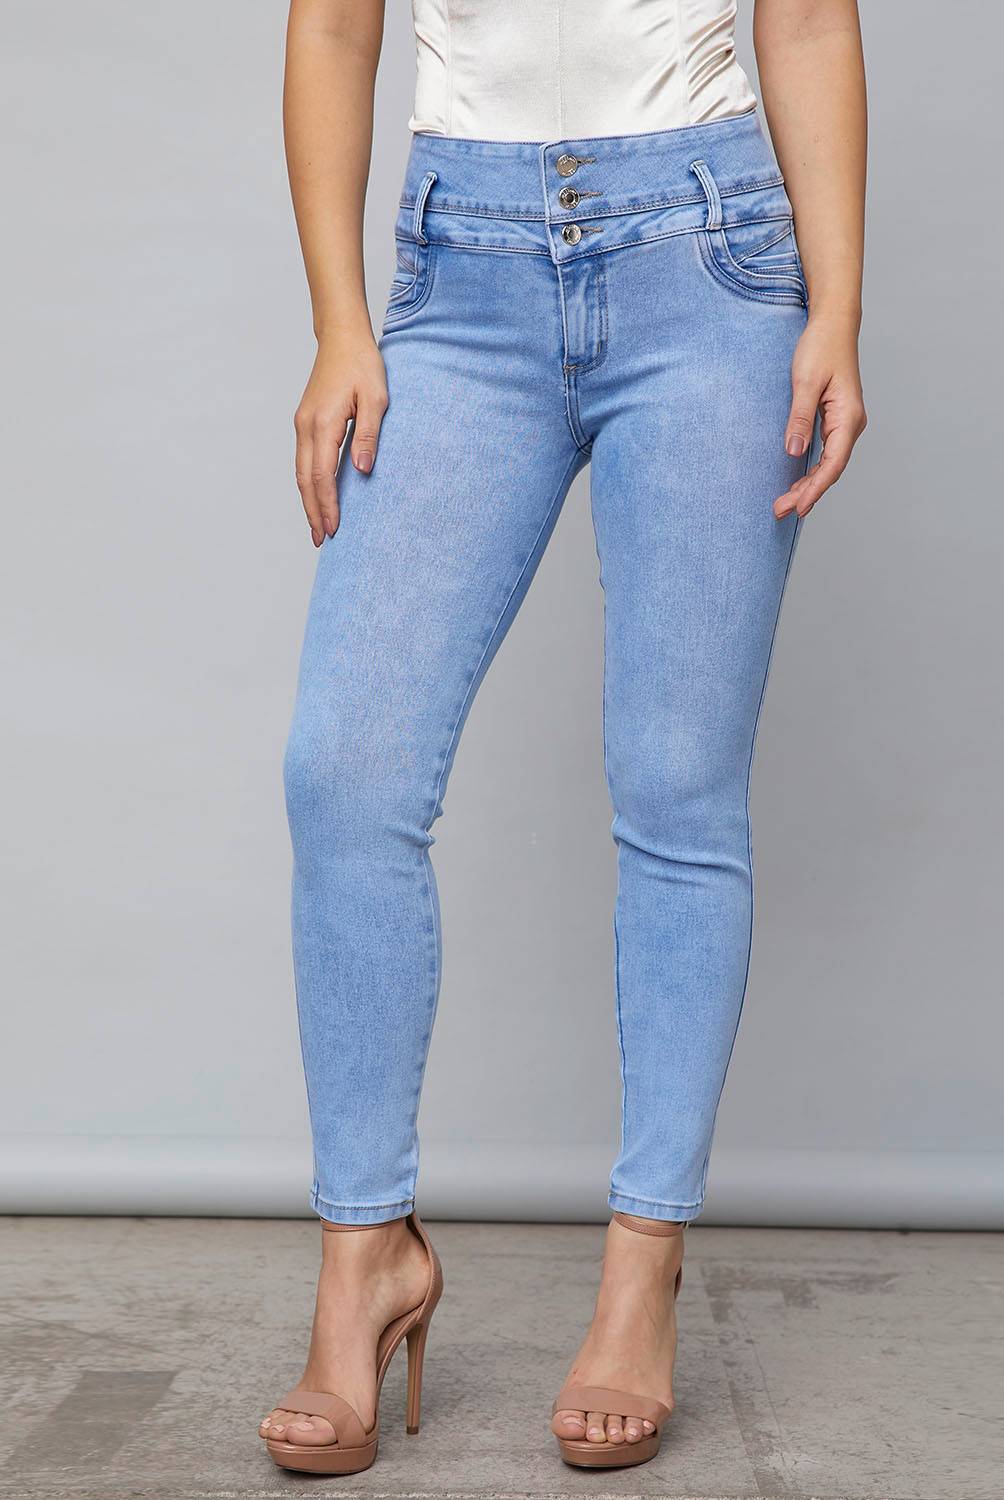 MOSSIMO - Jeans Skinny Push Up Tiro Alto Mujer Mossimo